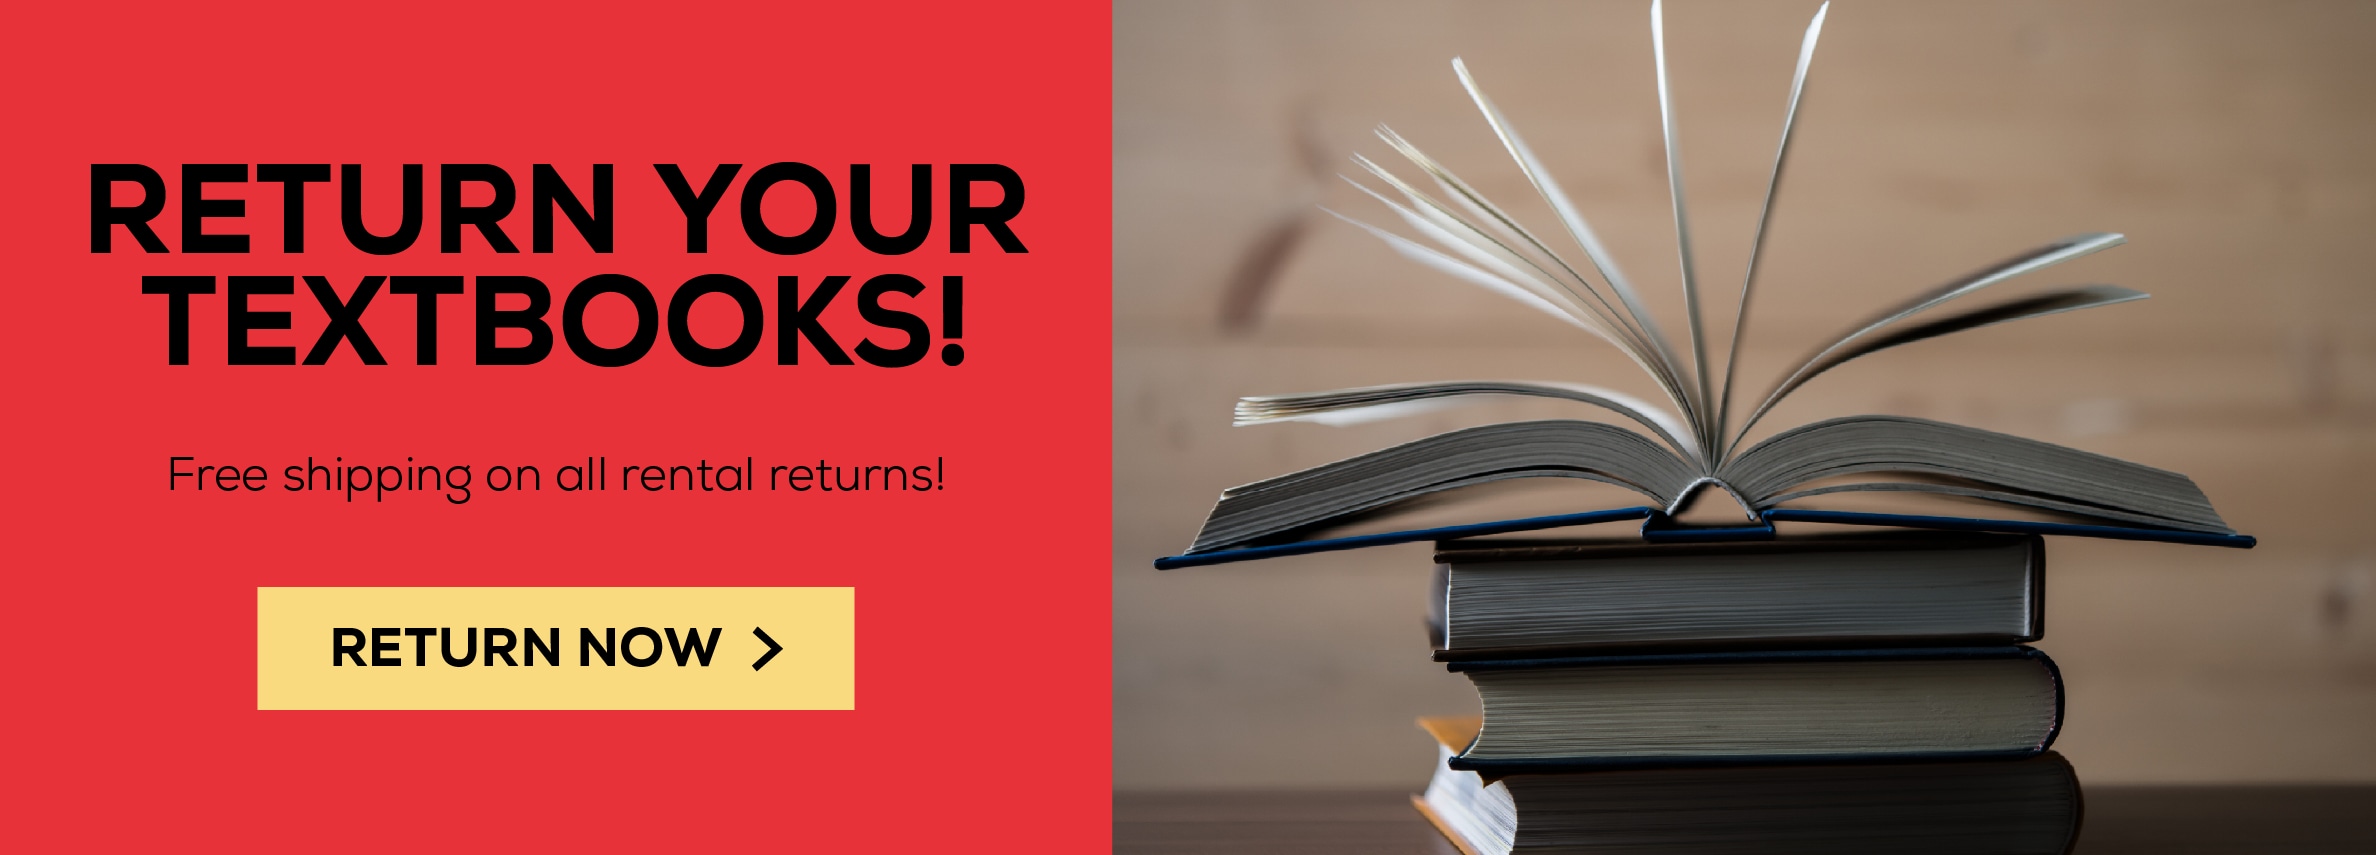 Return Your Textbooks. Free shipping on all rental returns! Return Now